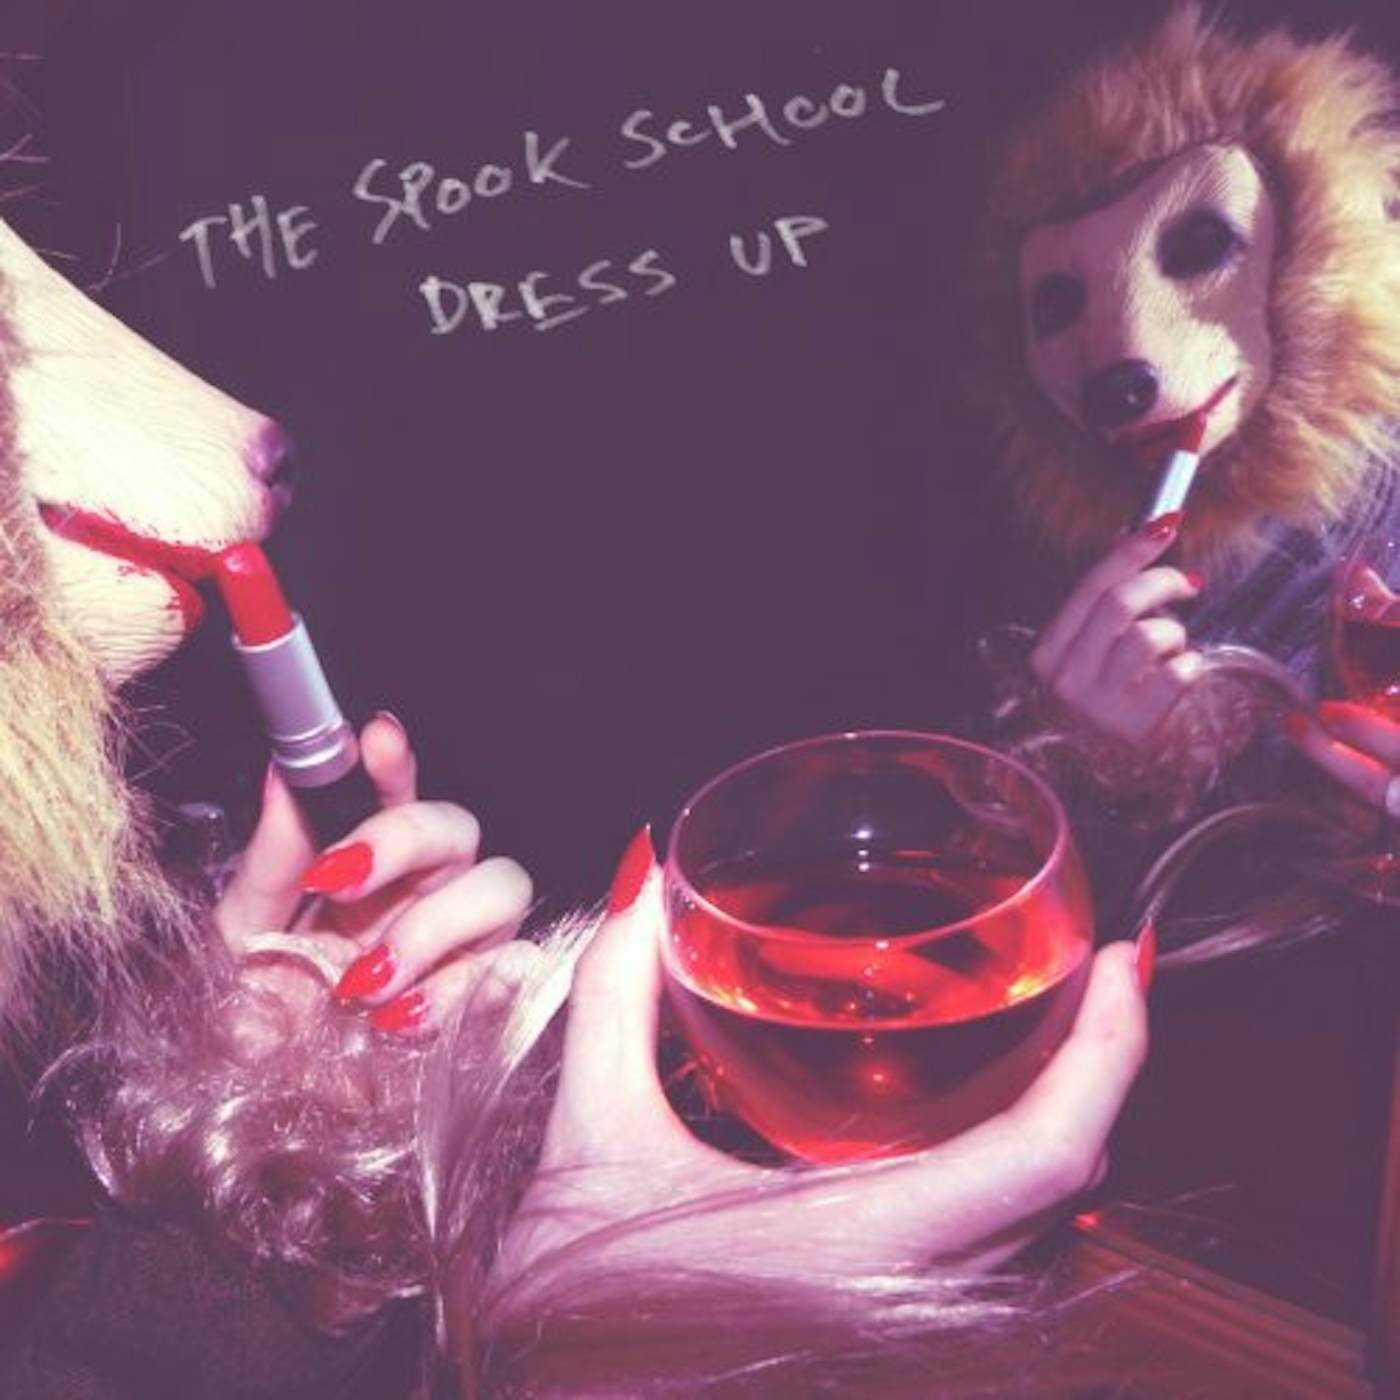 The Spook School Dress Up Vinyl Record